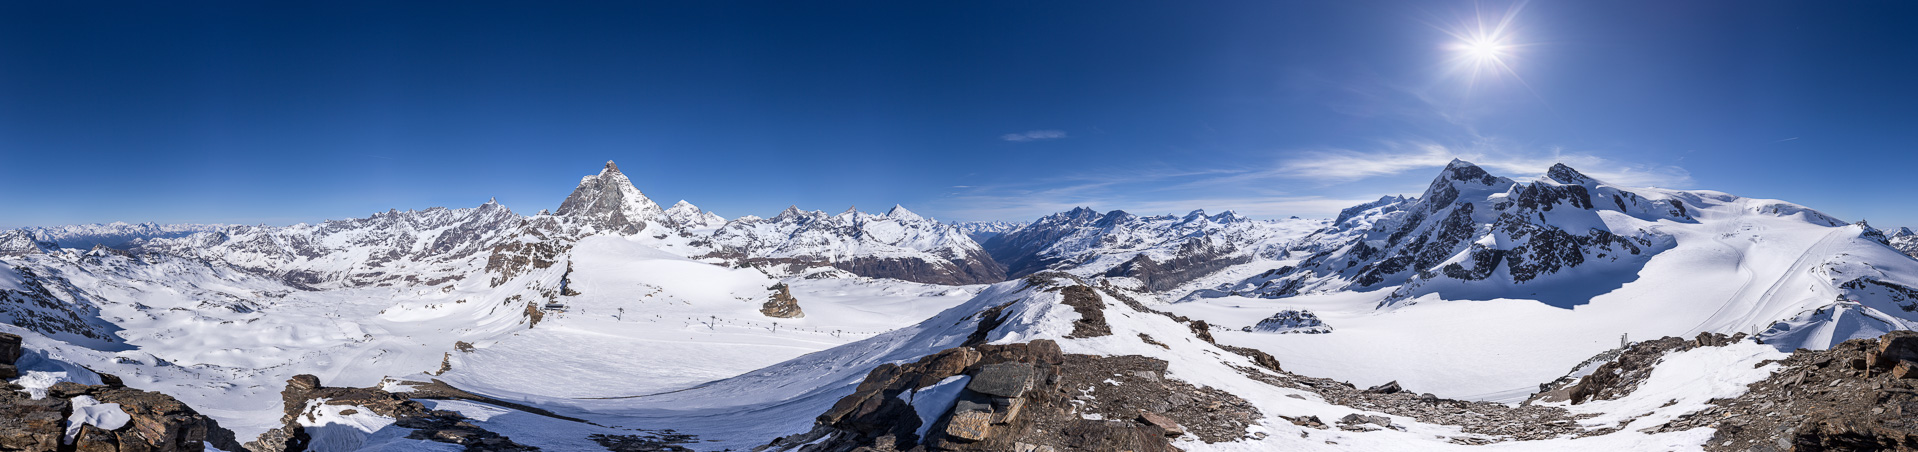 Grandioses Panorama über das Zermatter Skigebiet.